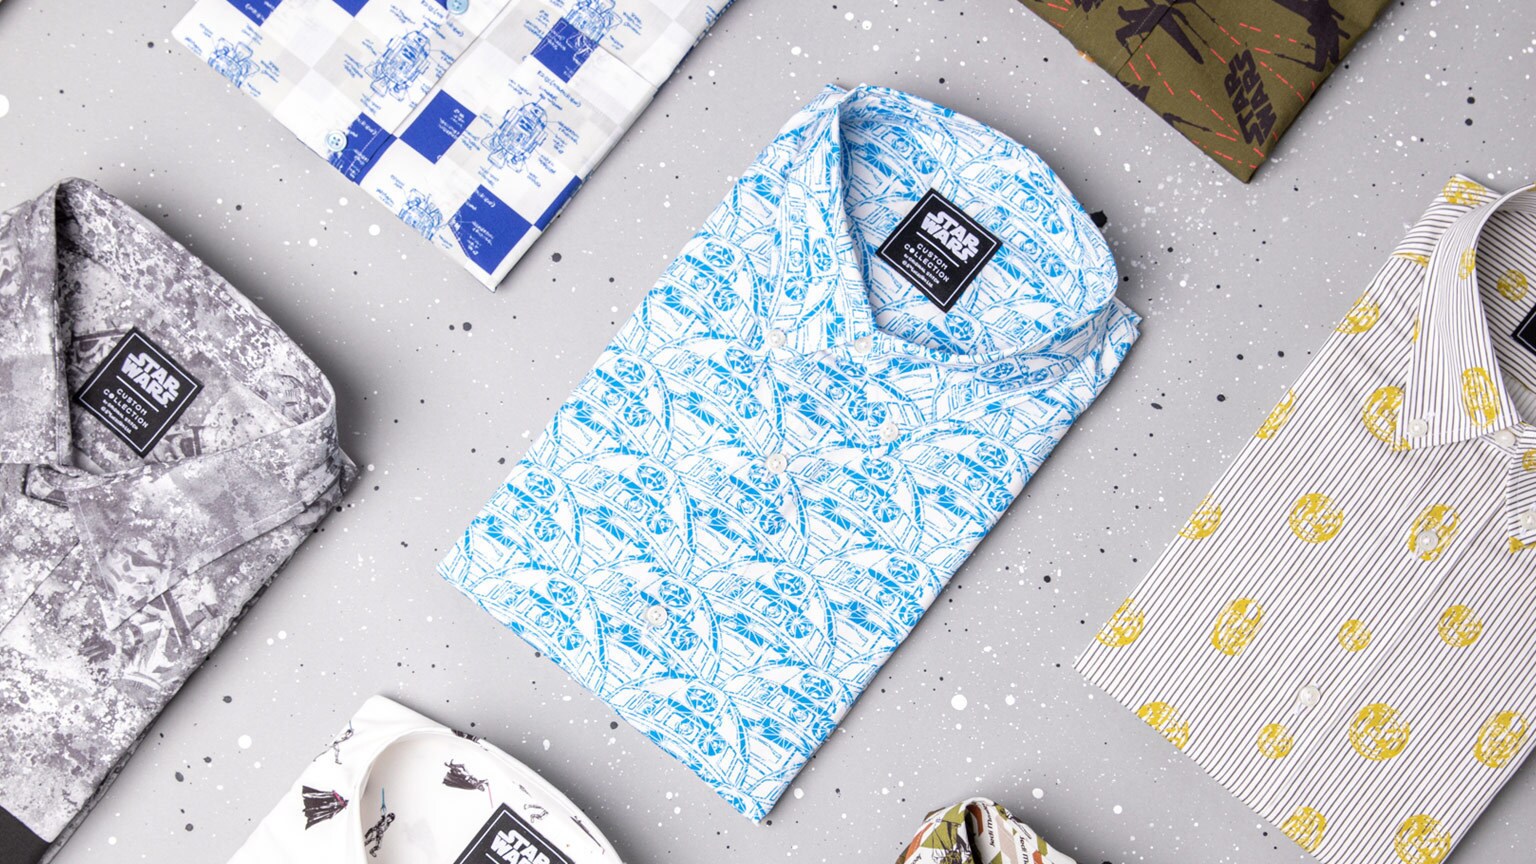 Design a One-of-a-Kind Star Wars Shirt with Original Stitch